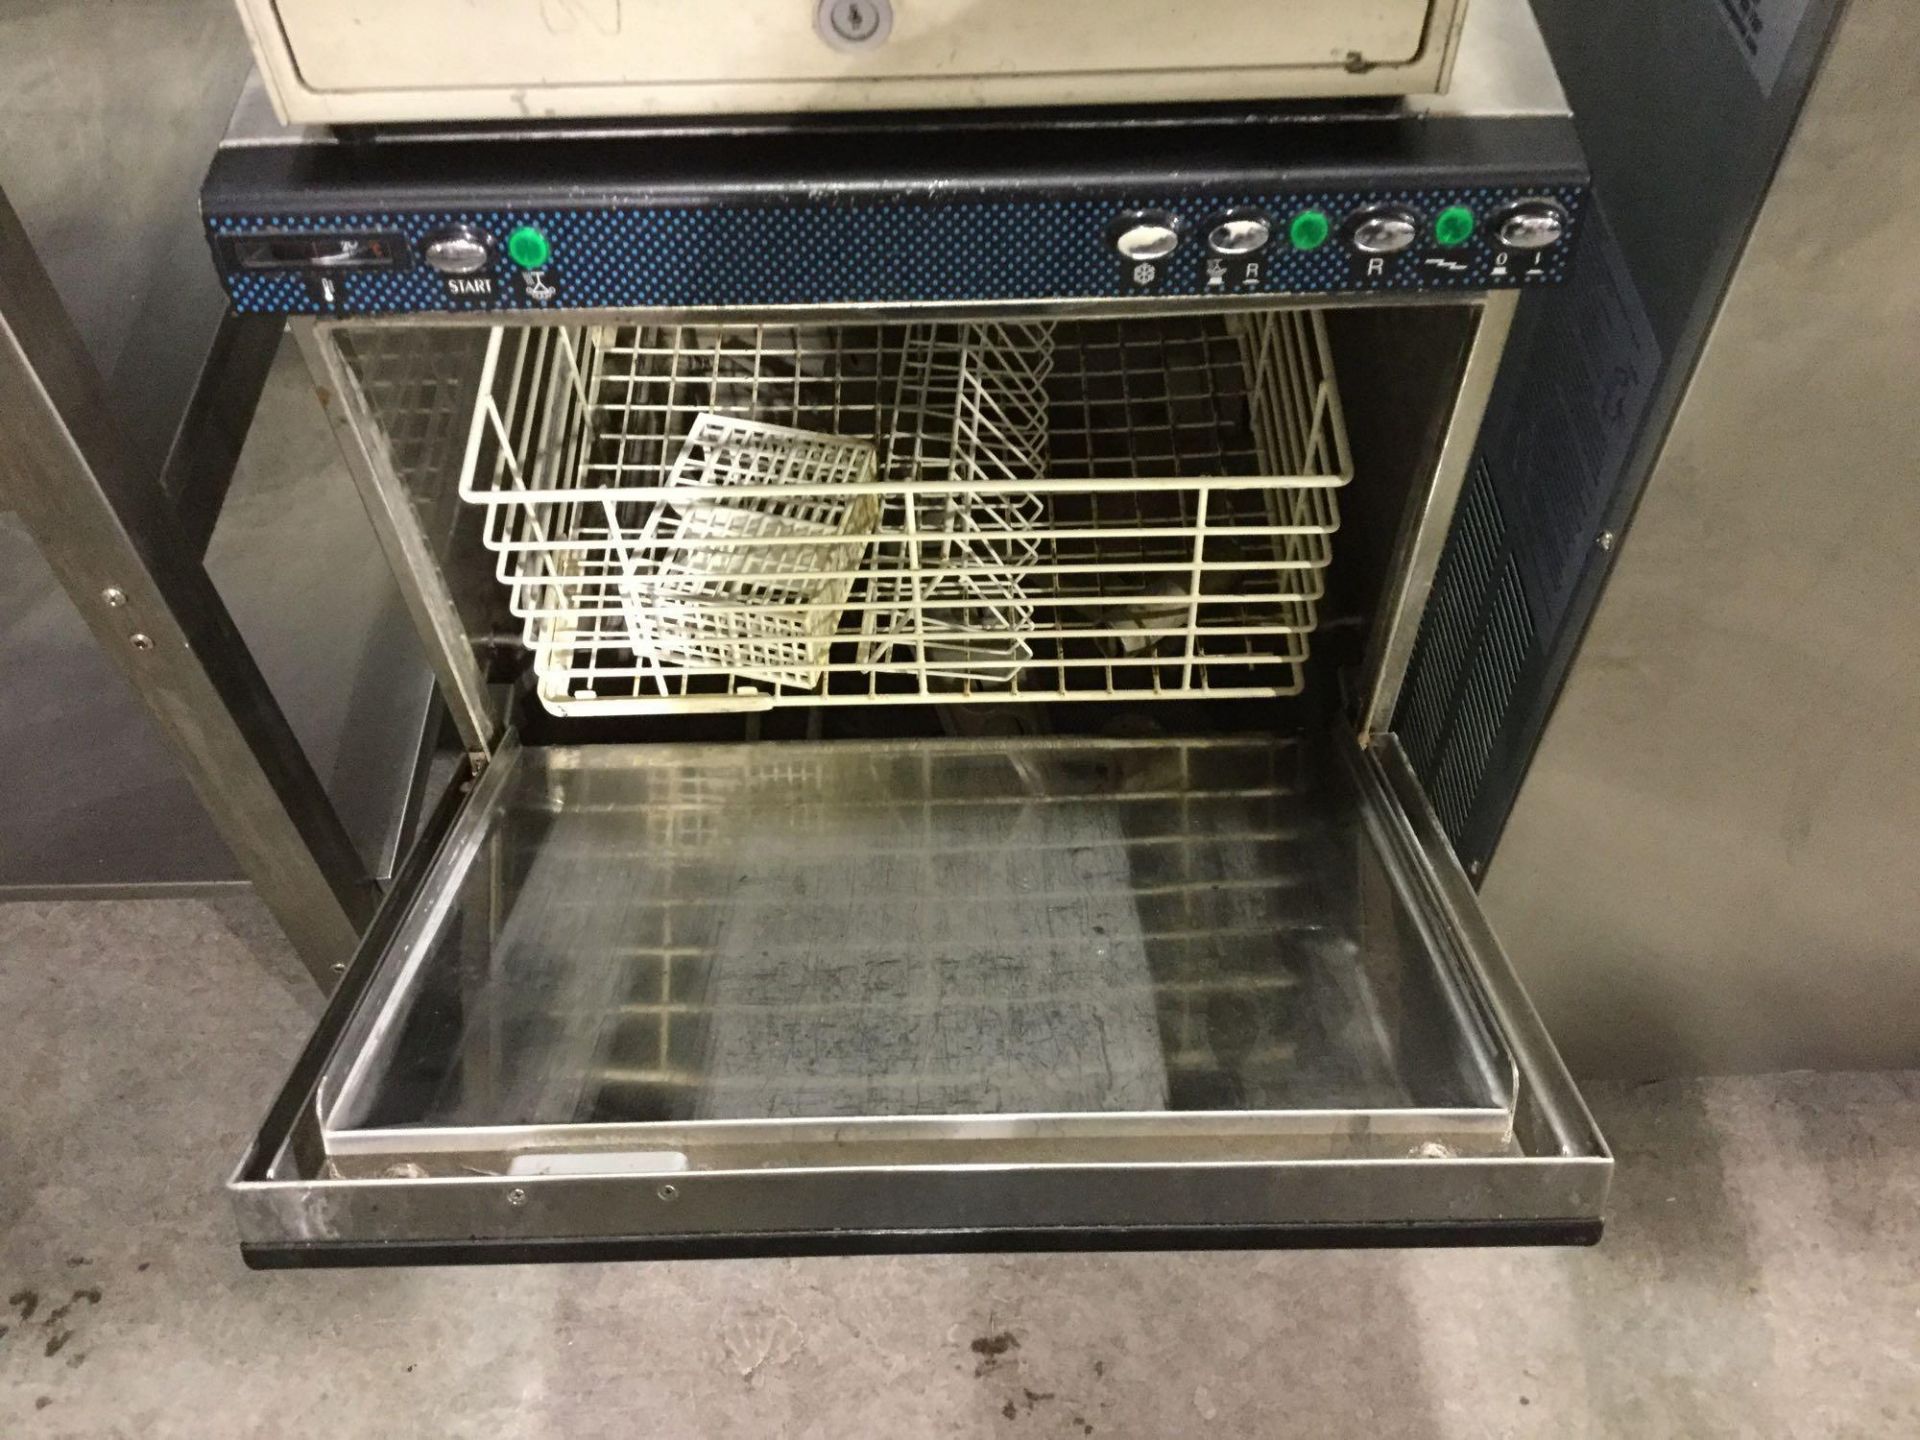 Silent System - Hemerson - Mini Dishwasher - model NPSD 48 - Image 2 of 3